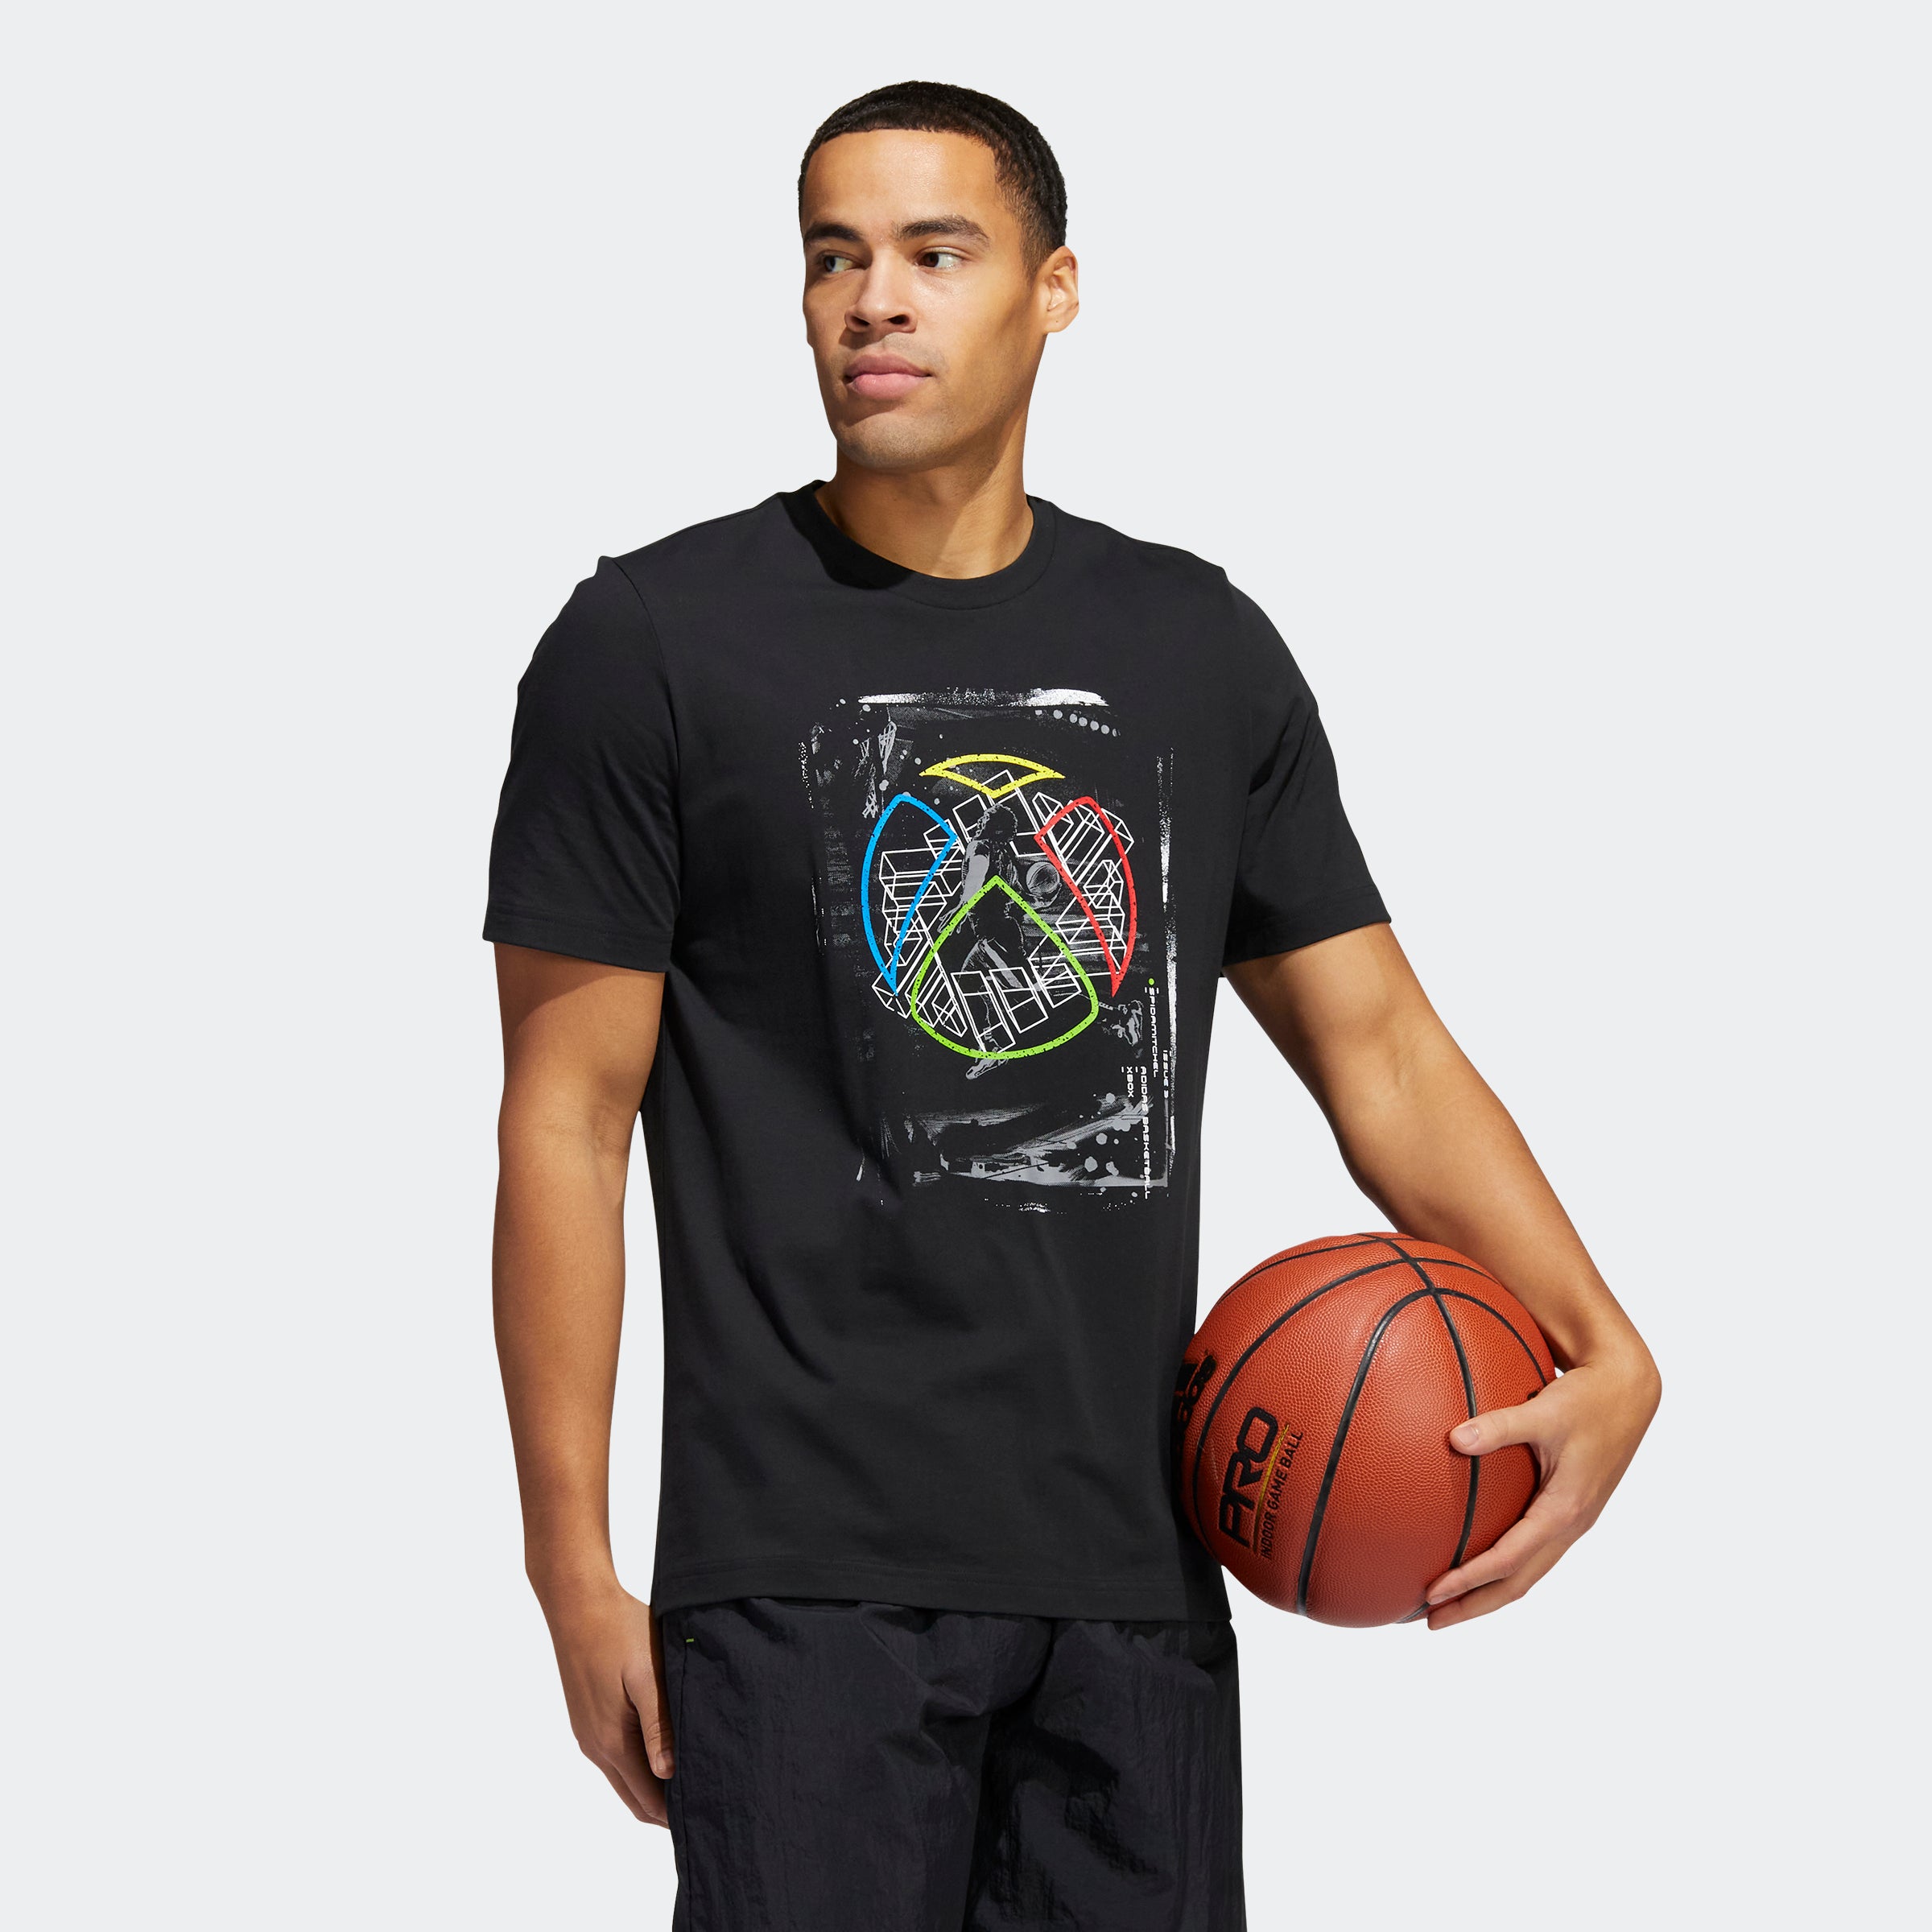 Donovan Mitchell Shirt Merchandise Professional Basketball 